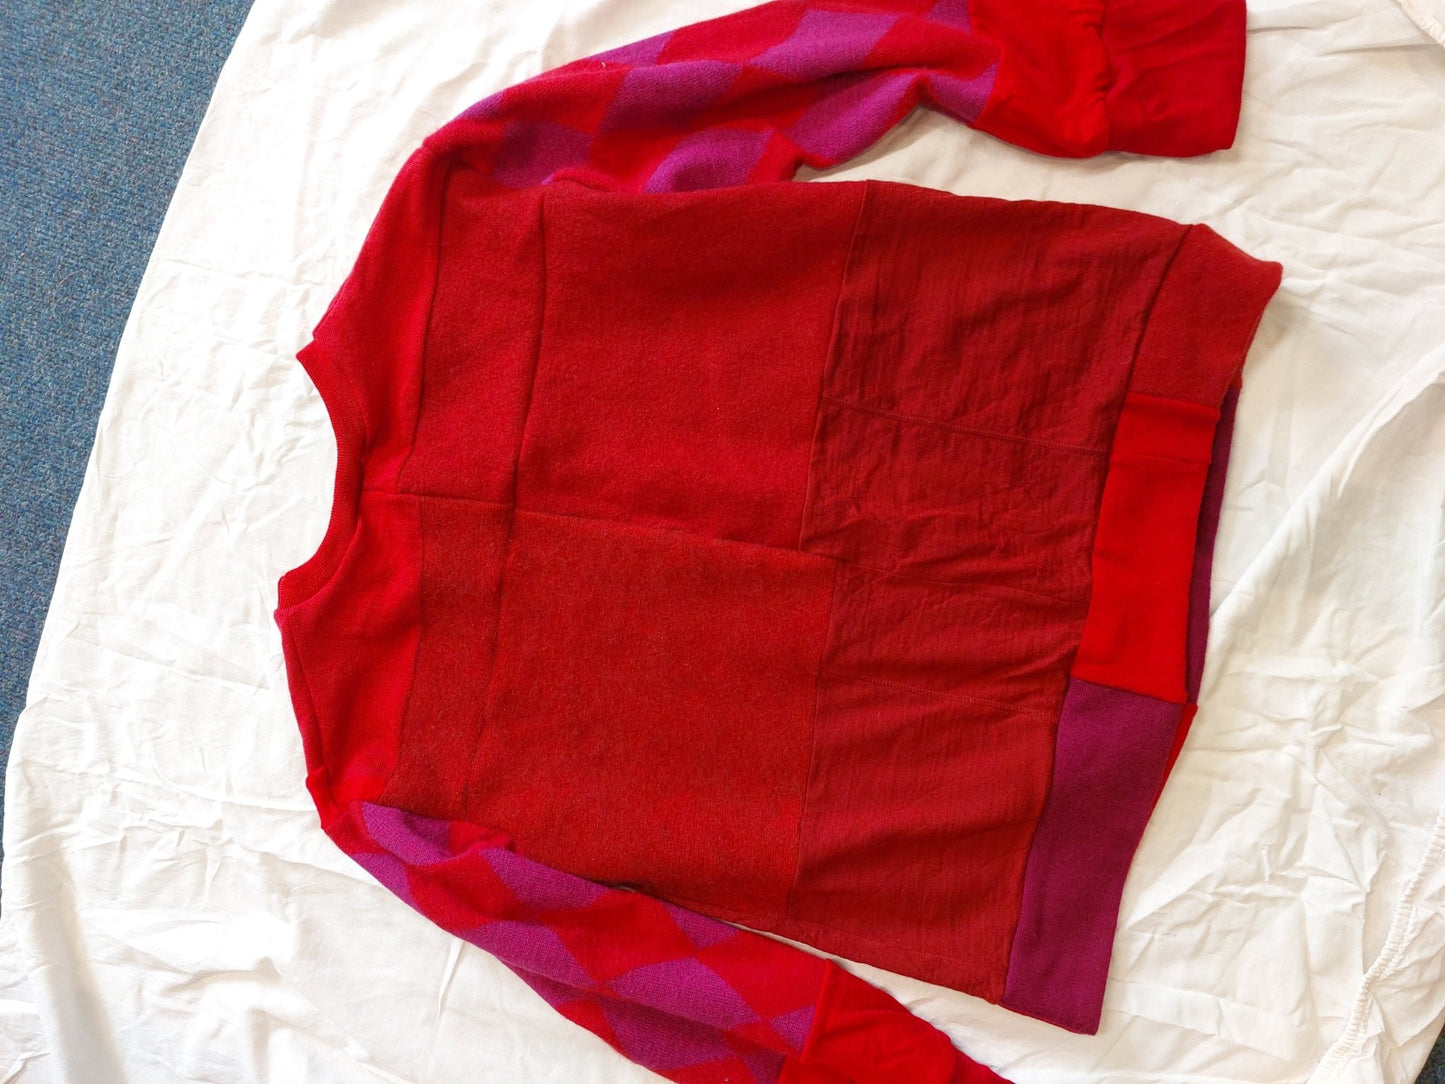 Earthy red with diamond pattern sleeves Unisex Merino Sweater MEDIUM - Heke design